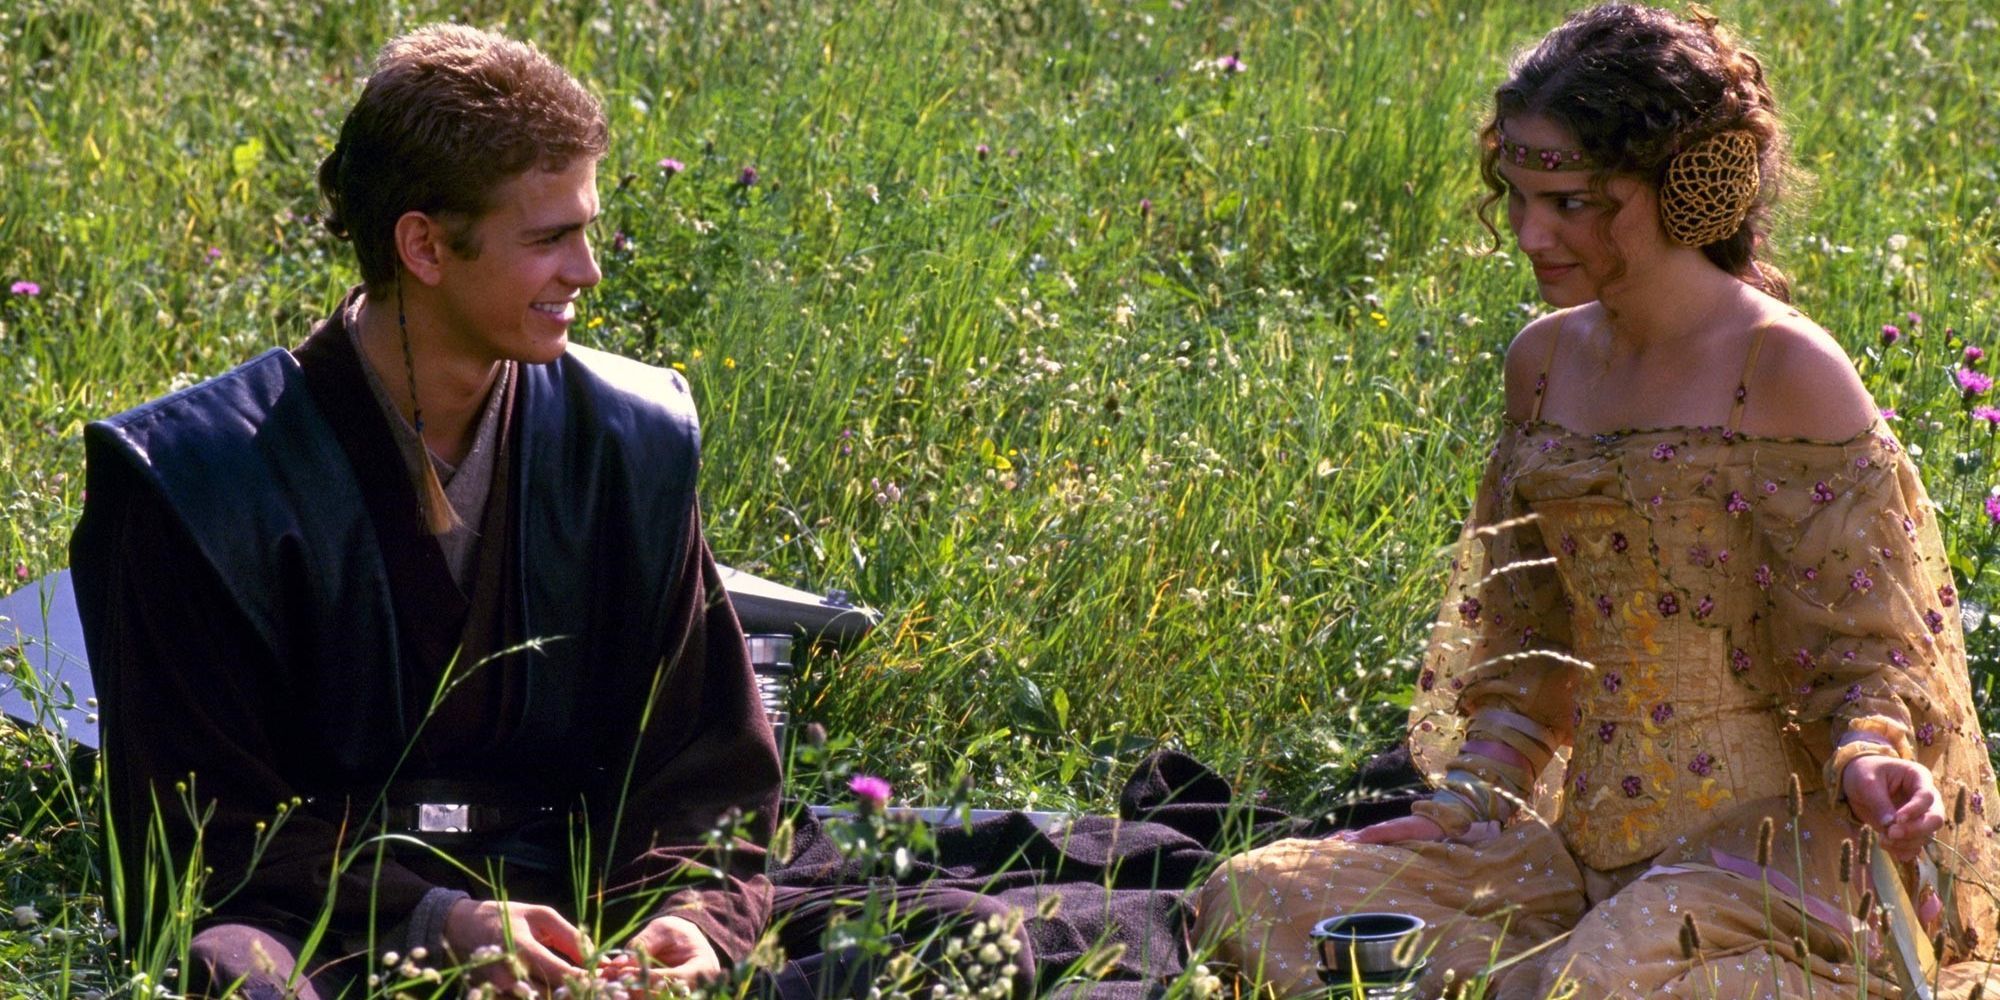 Anakin Skywalker (Hayden Christensen) & Padme Amidala (Natalie Portman) on Naboo in Star Wars: Attack of the Clones